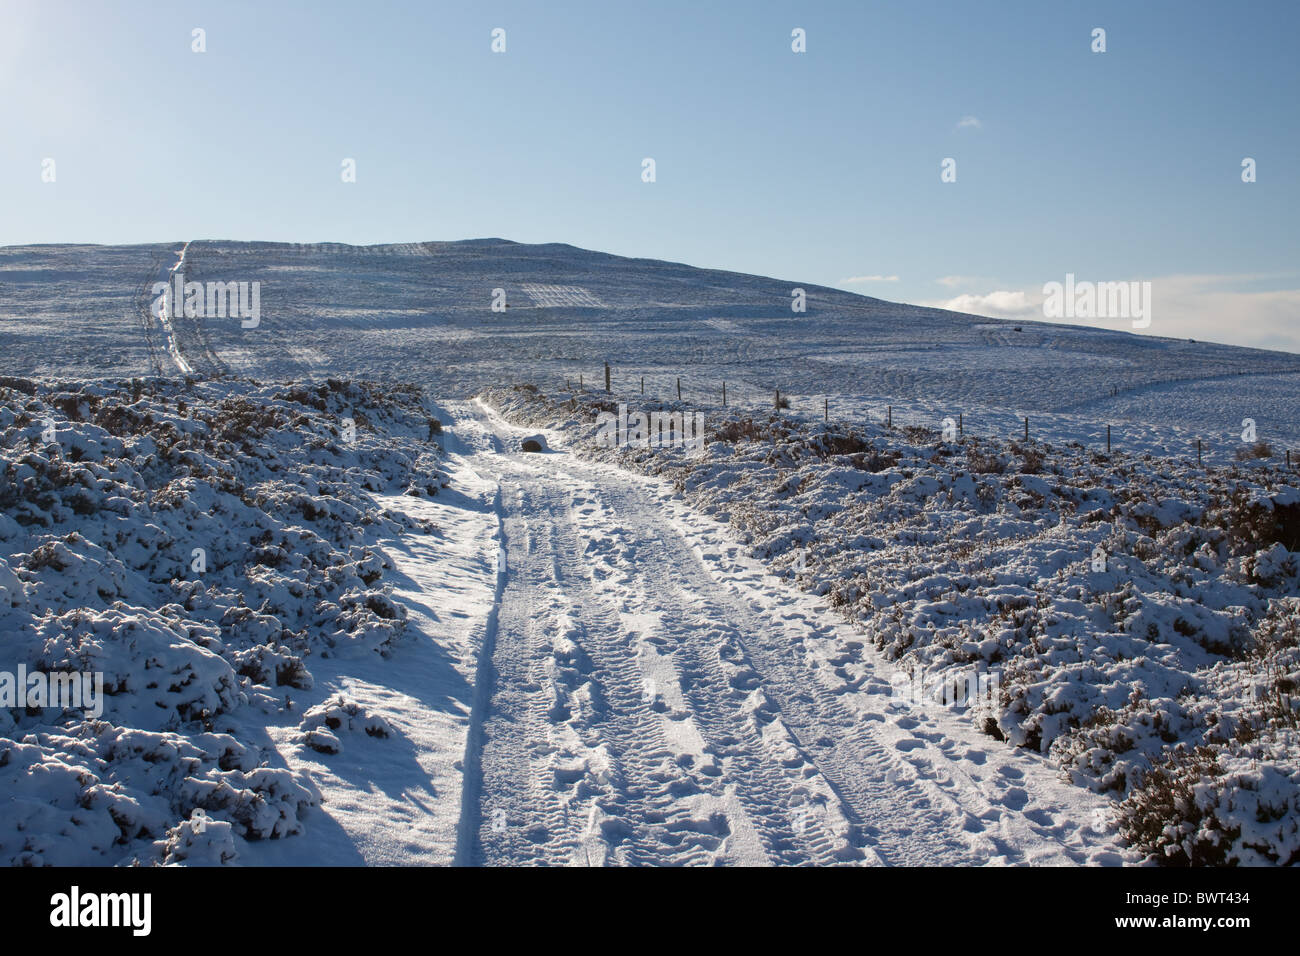 Moel y Gamelin in winter, above the town of Llangollen, Wales Stock Photo